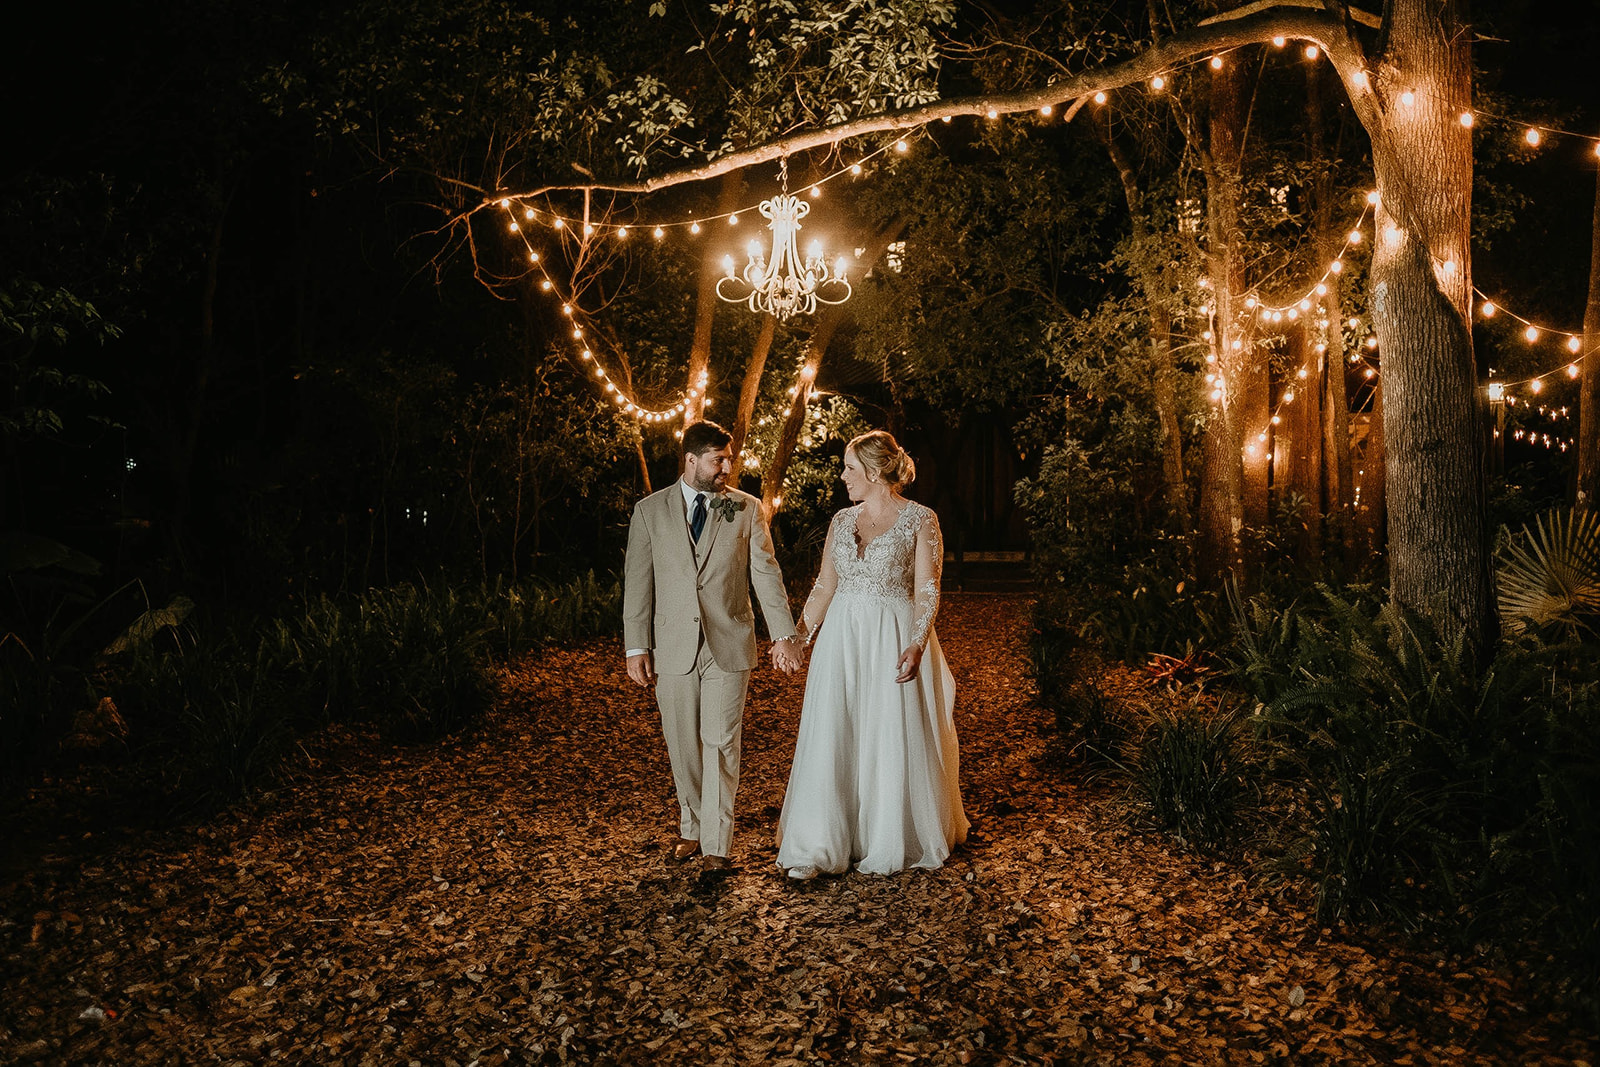 Bridle Oaks Barn Central Florida Rustic Wedding Reception Photography